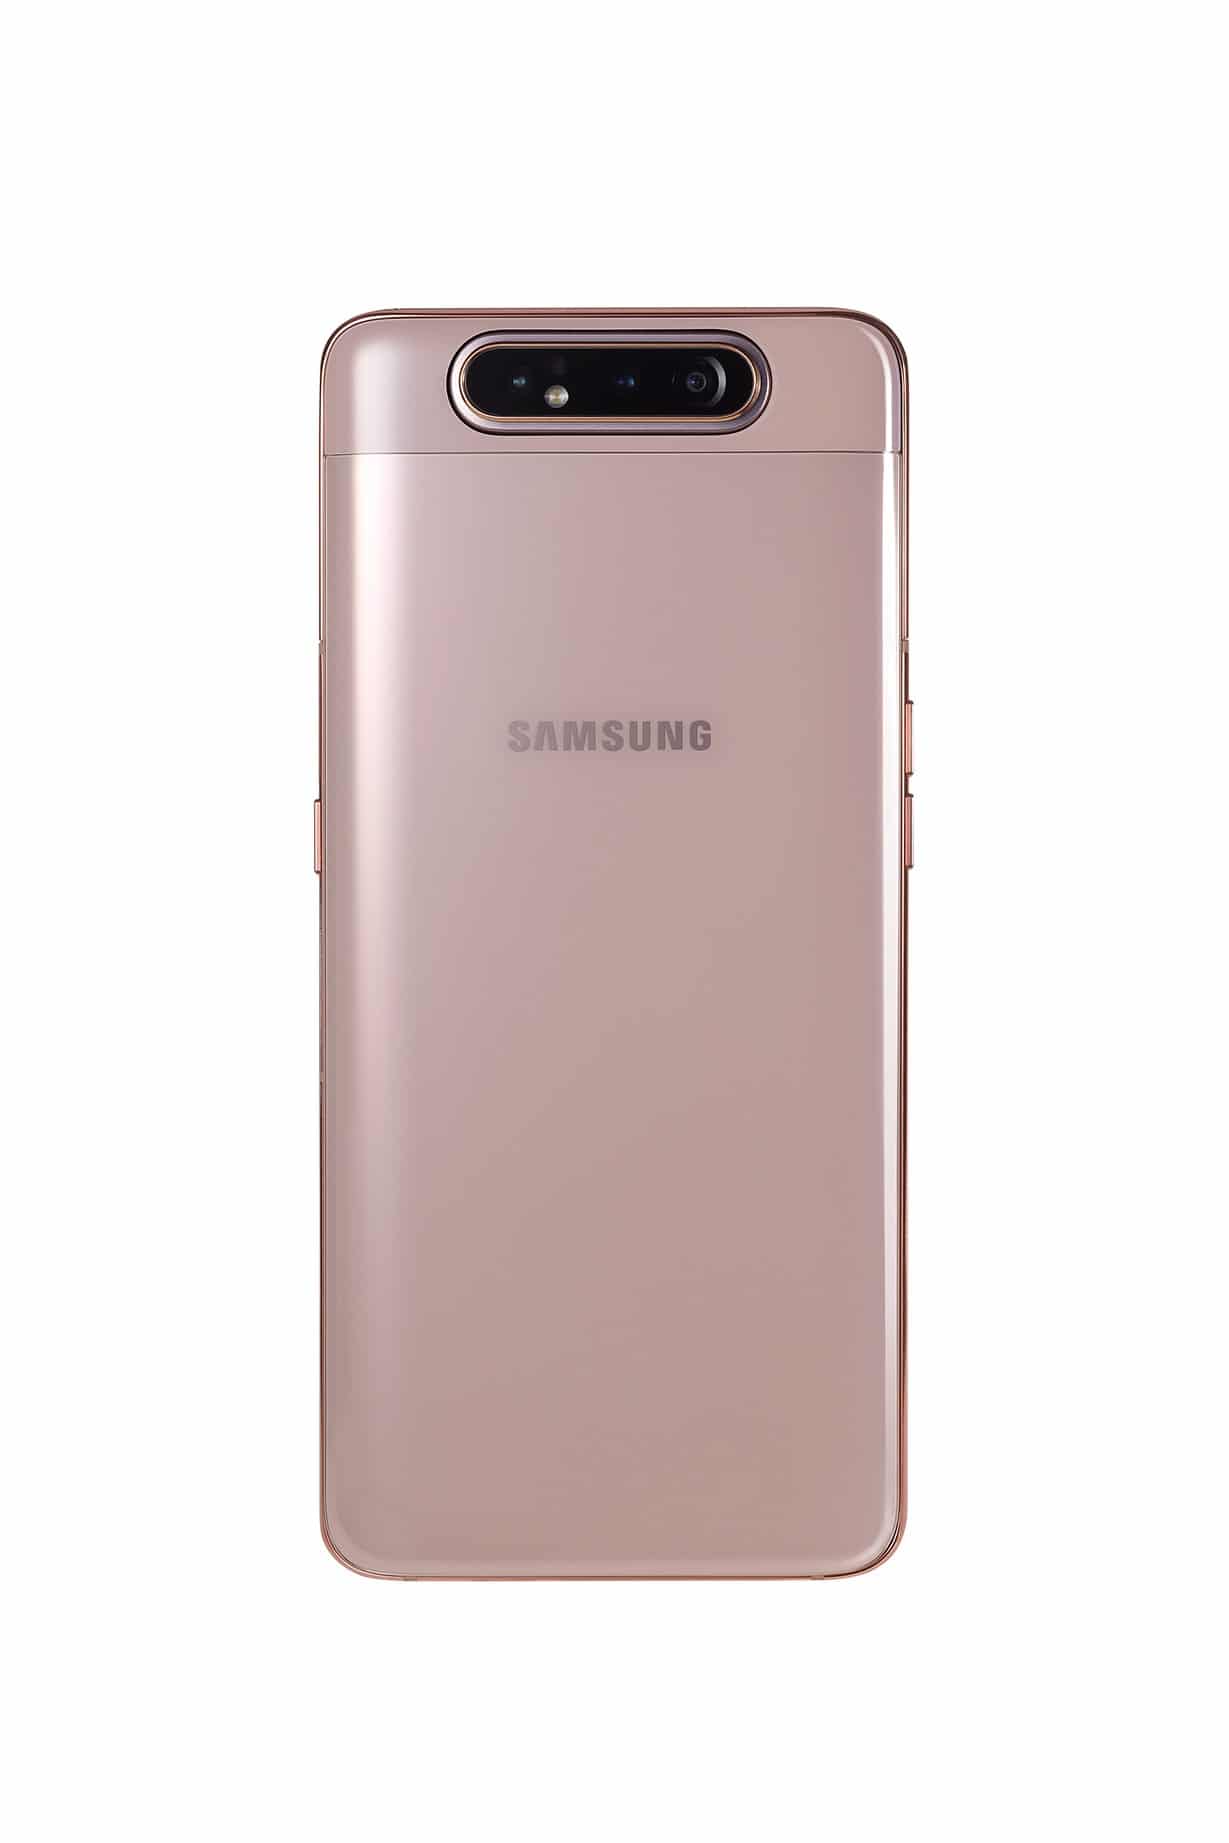 Samsung เปิดตัว Galaxy A80 กล้องหมุนได้ แจ่มทั้งหน้าและหลัง 9